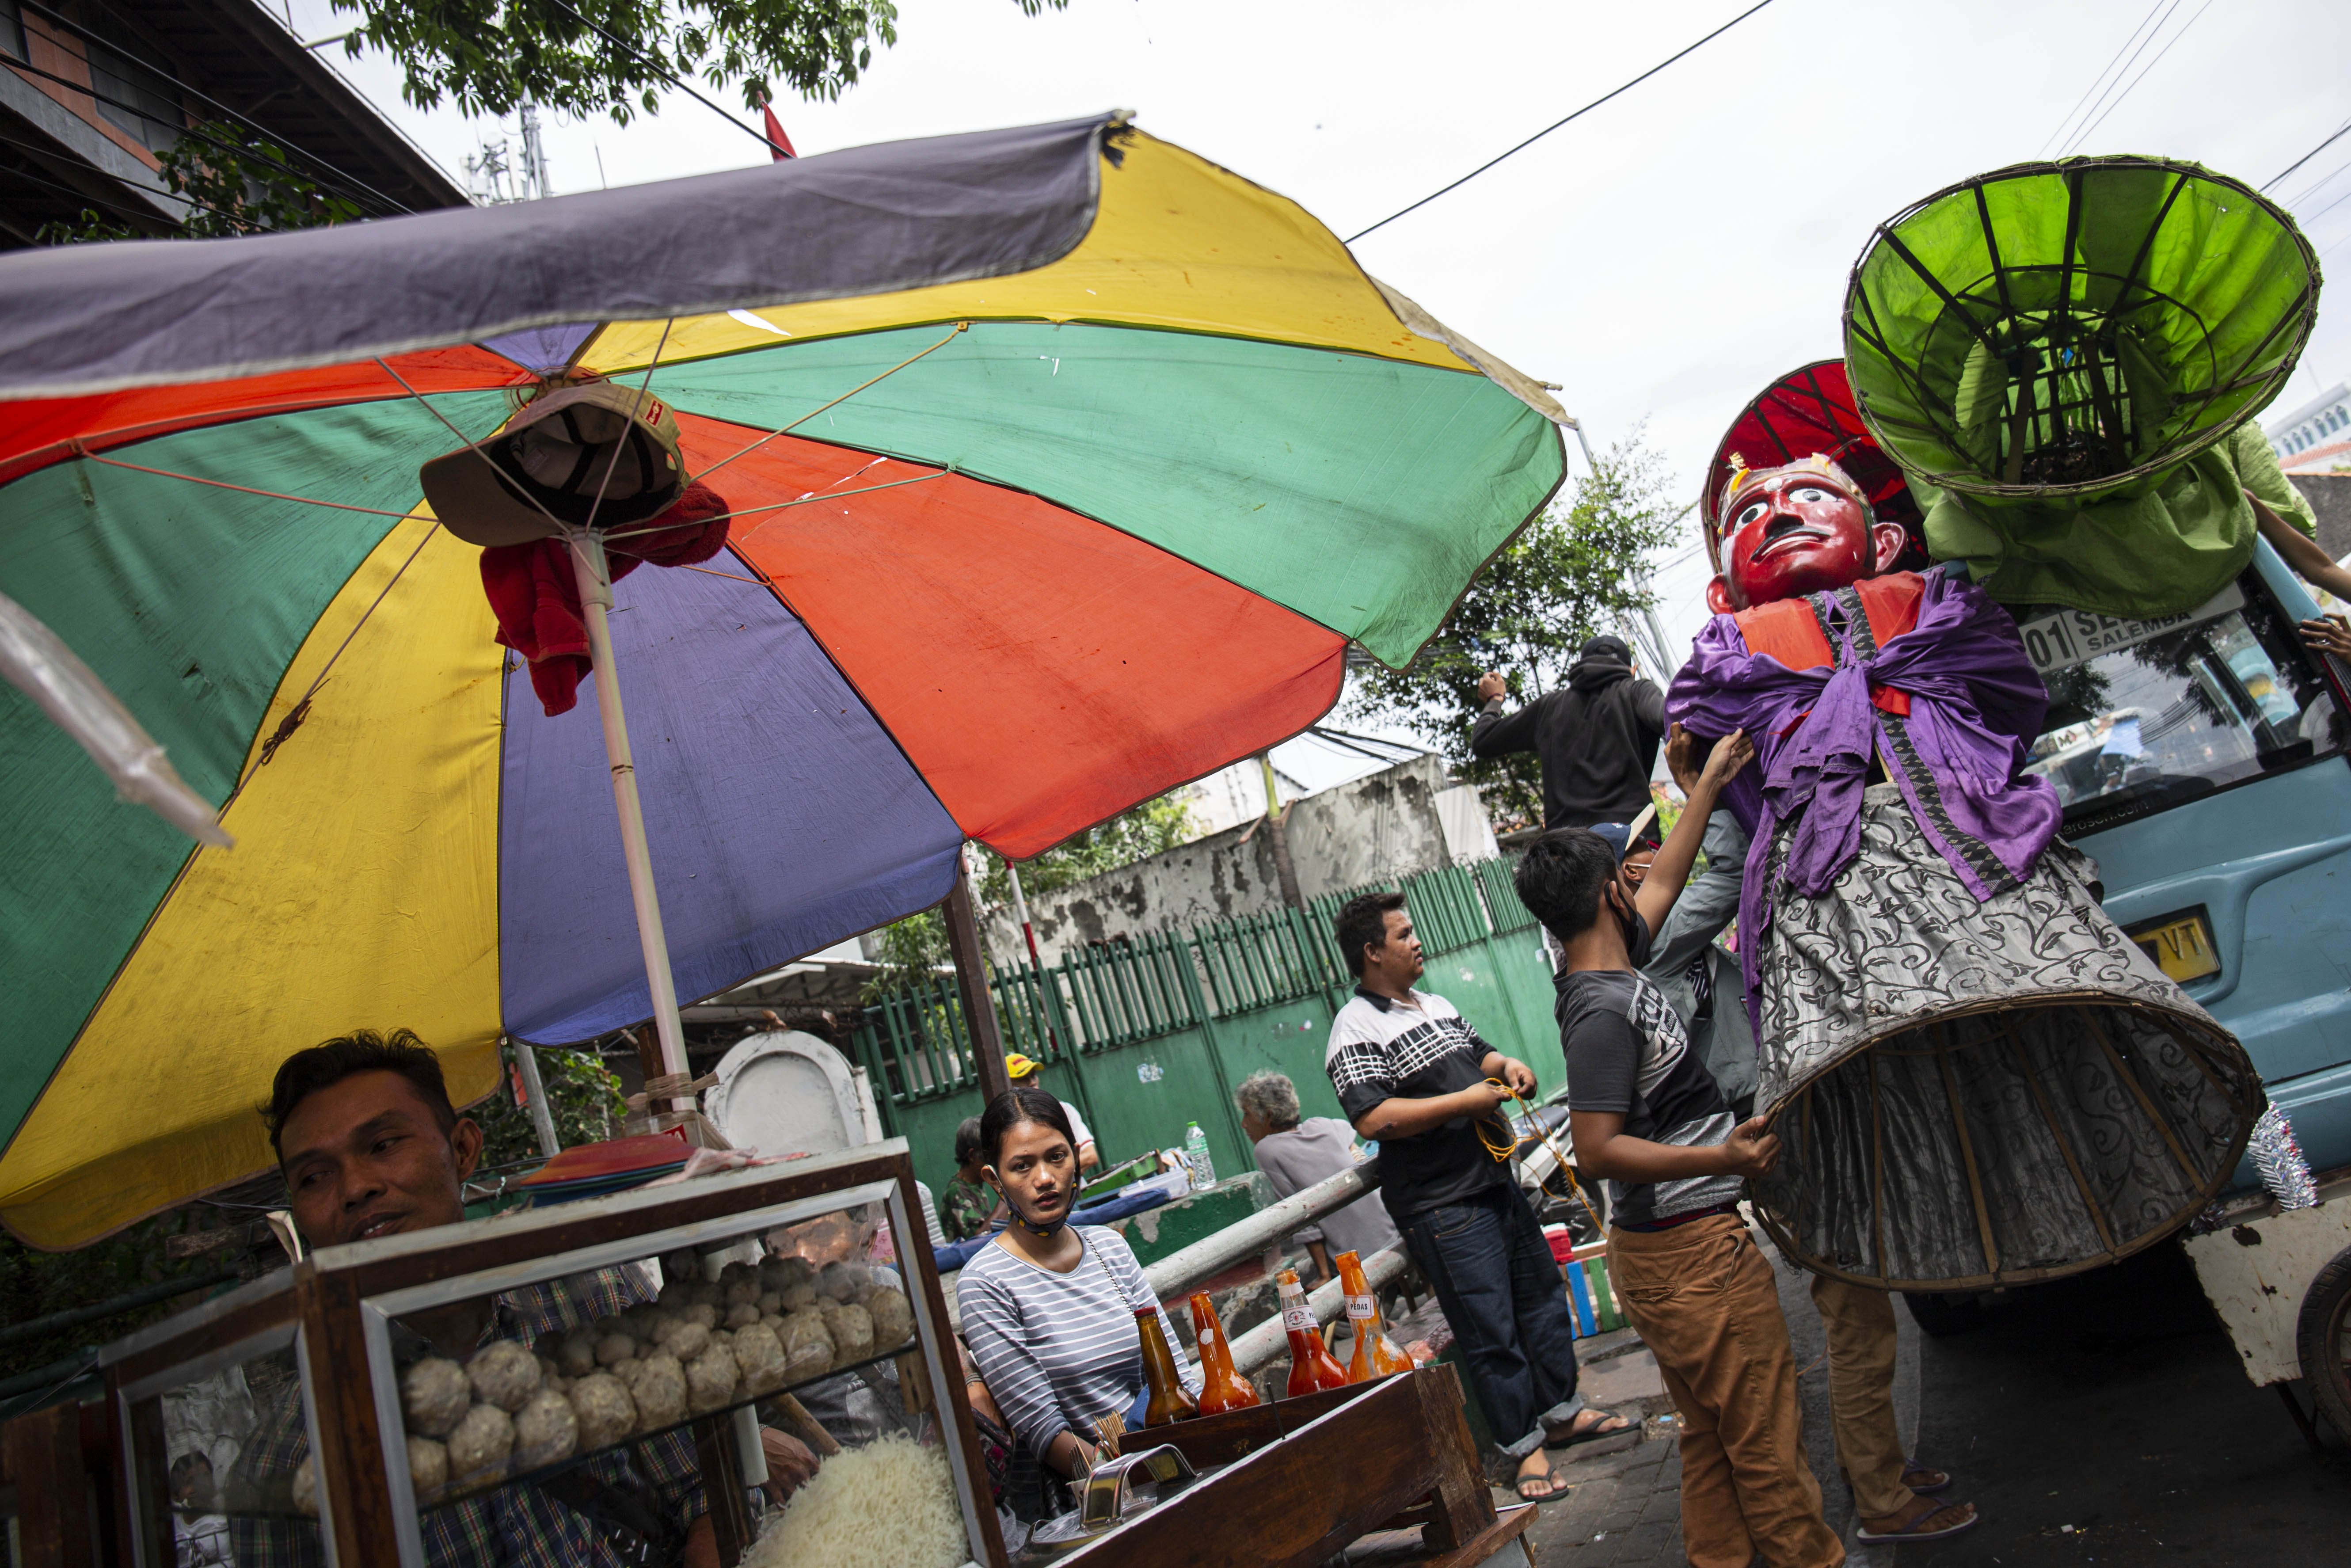 Pegiat seni jalanan menaikan boneka ondel-ondel keatas bajaj di Jalan Kembang Pacar, Kramat Pulo, Senen, Jakarta , Rabu (12/8/2020).